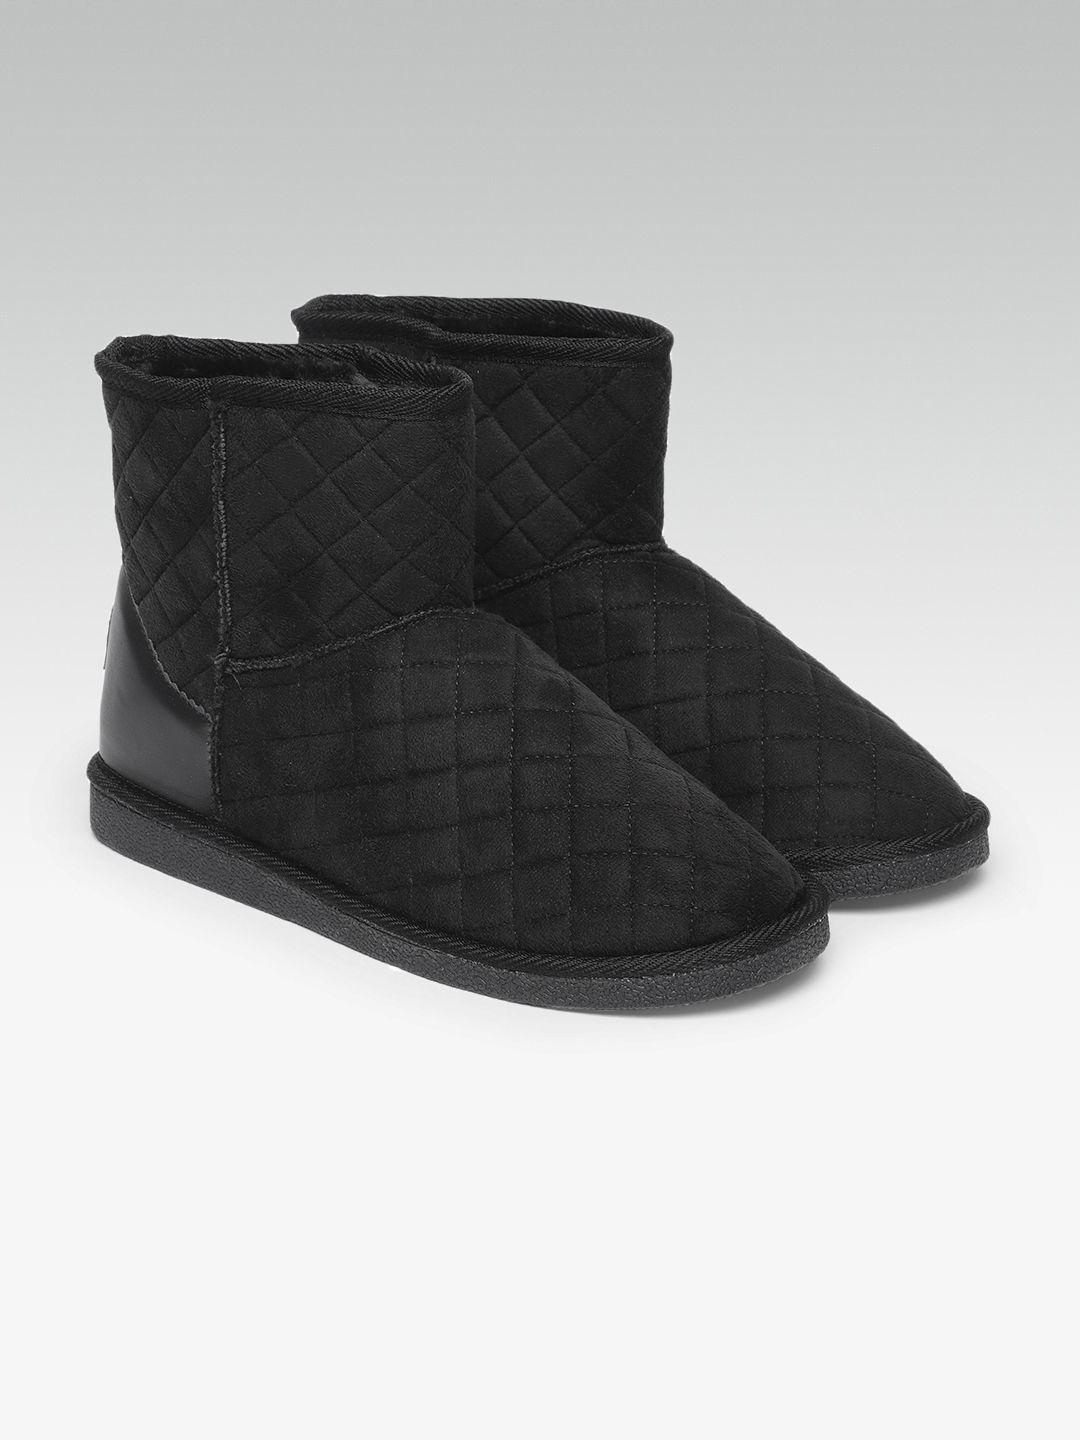 carlton london women black textured mid-top flat boots